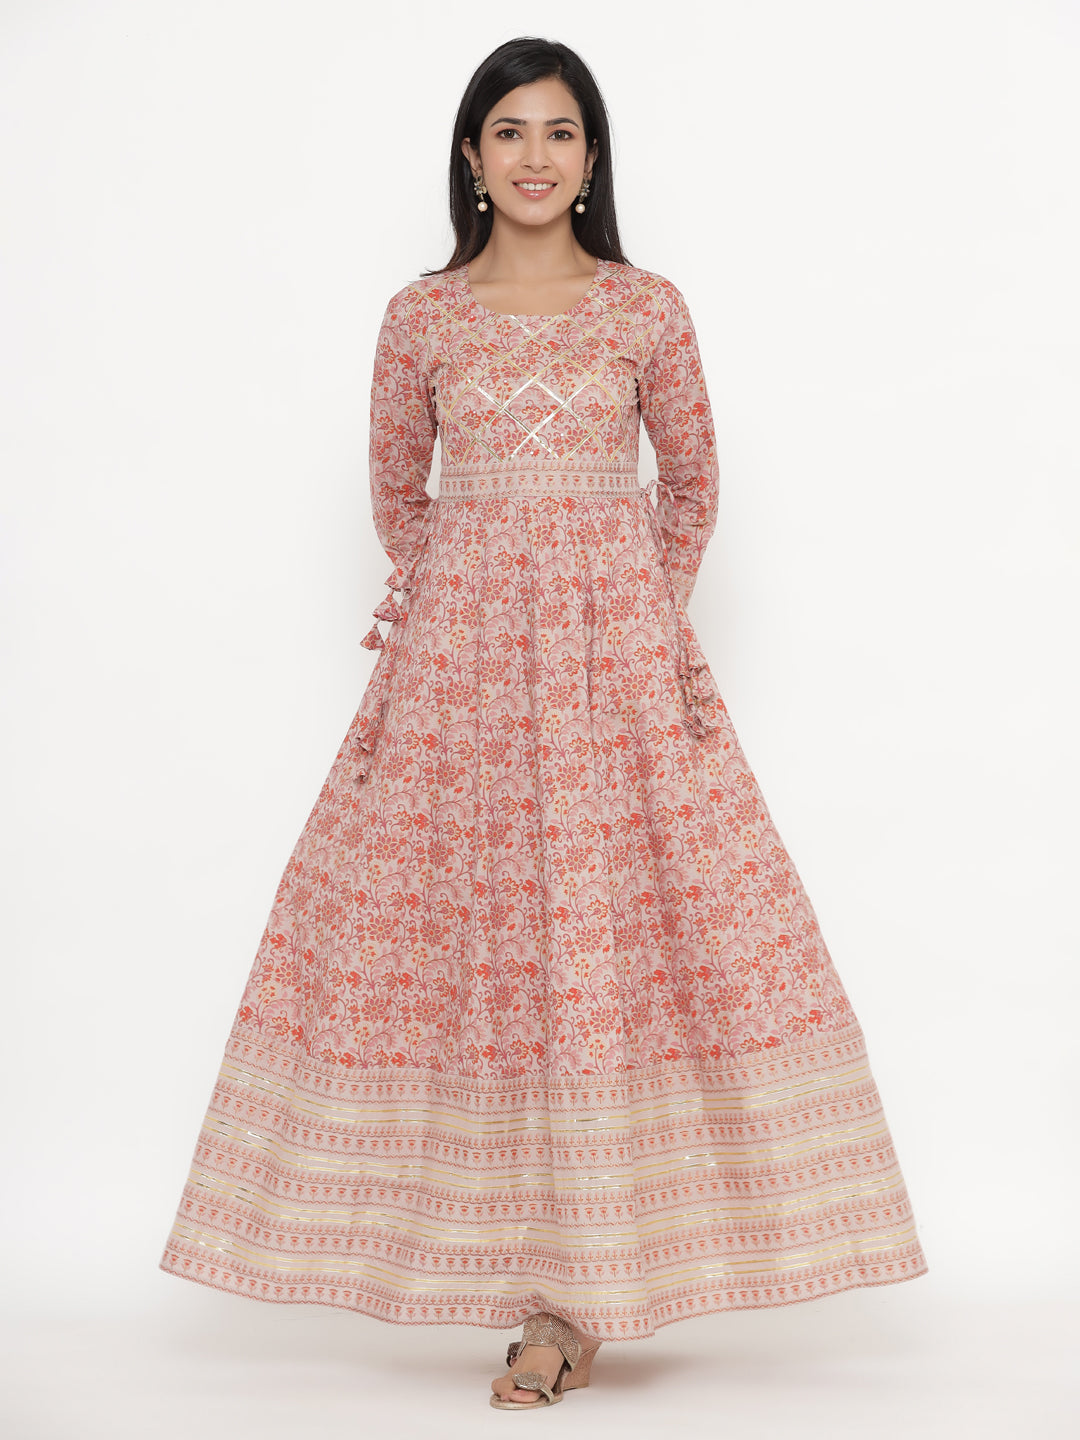 Women's Self Desgin Cotton Fabric Anarkali & Dupatta Off-White Color - Kipek